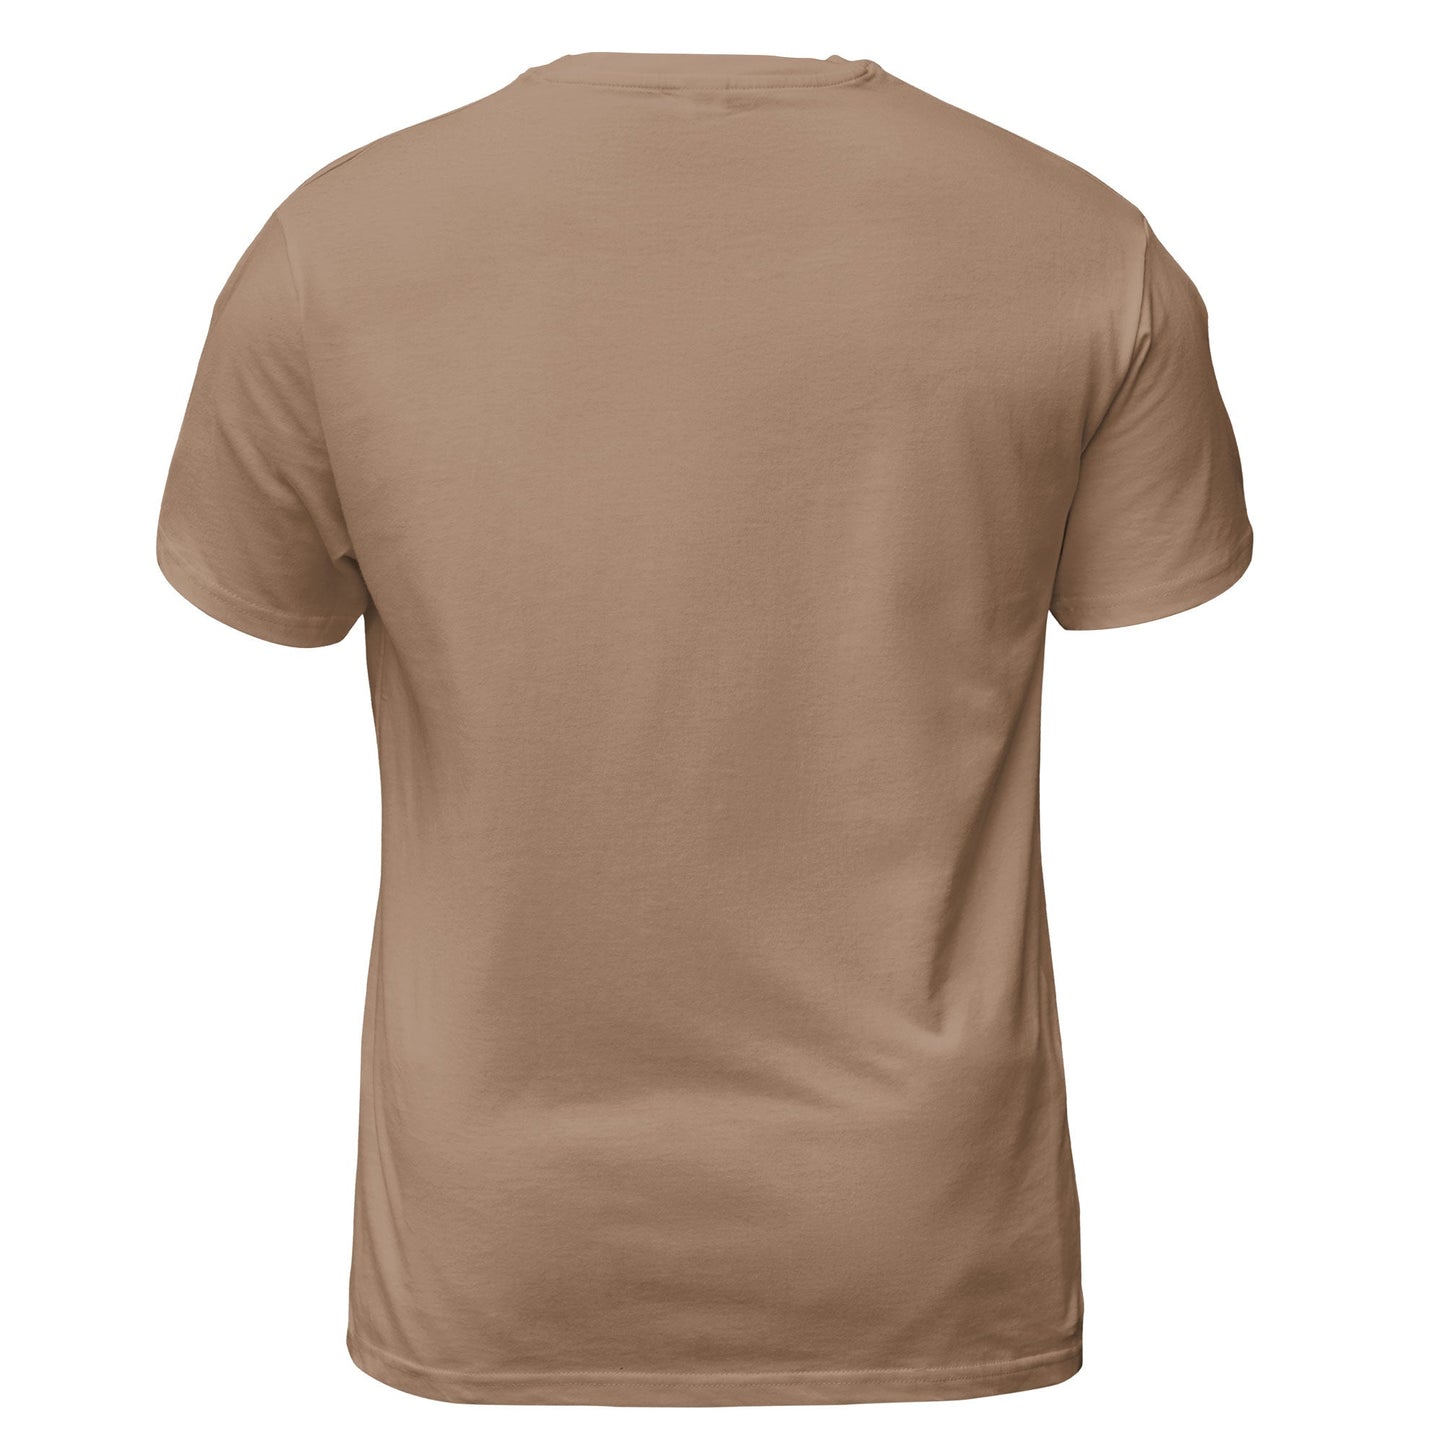 Rhodesian Ridgeback - 3D Graphic T-Shirt